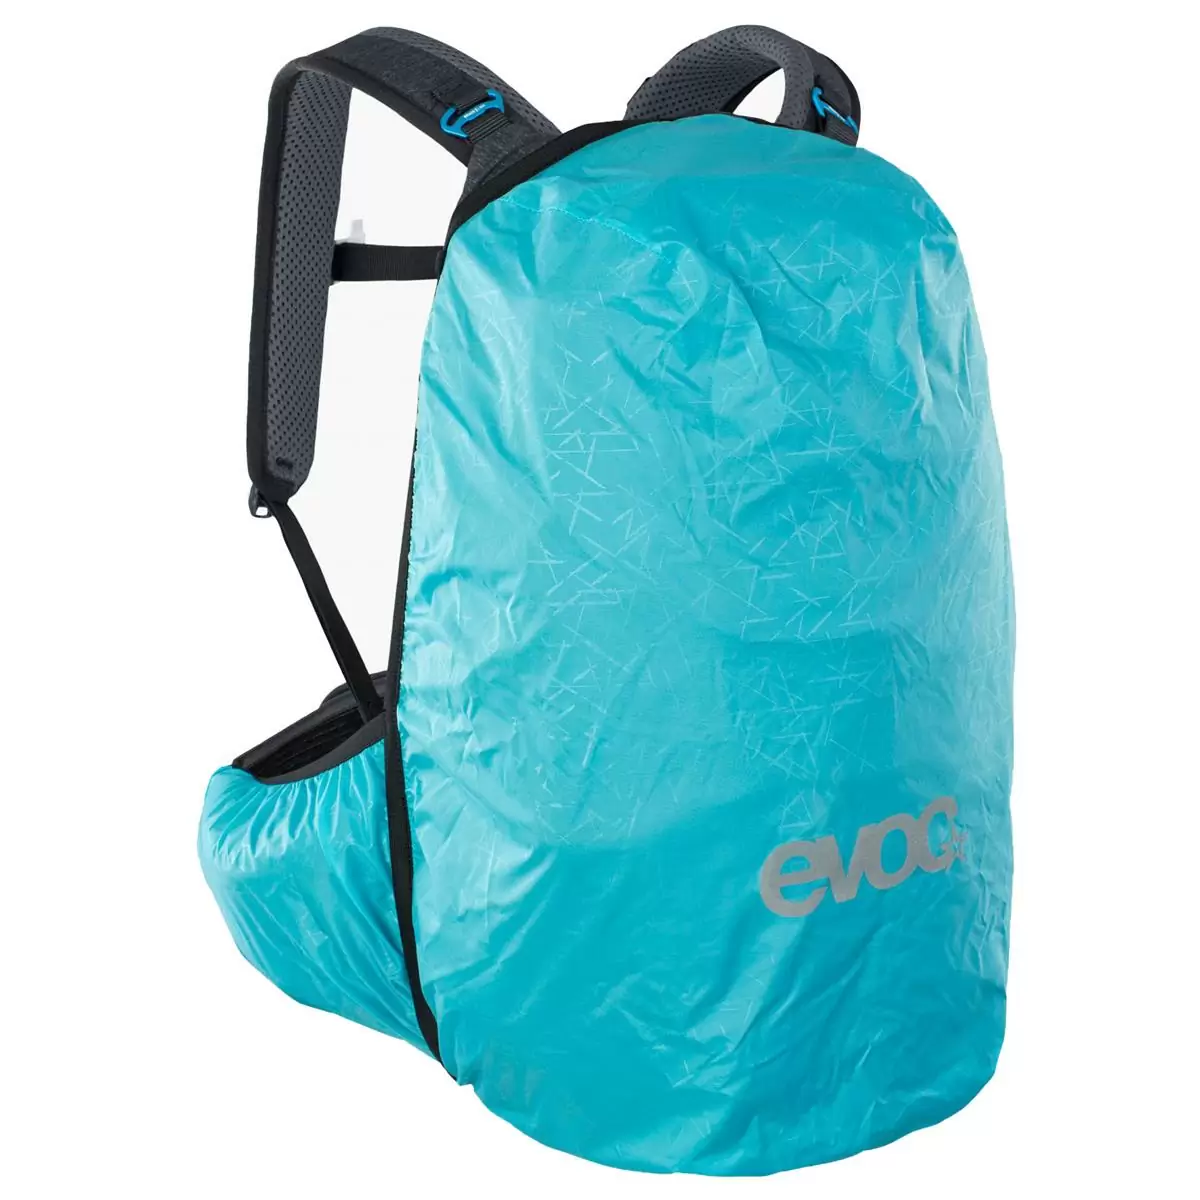 Backpack Trail Pro 26 litri black - carbon grey size L/XL #4